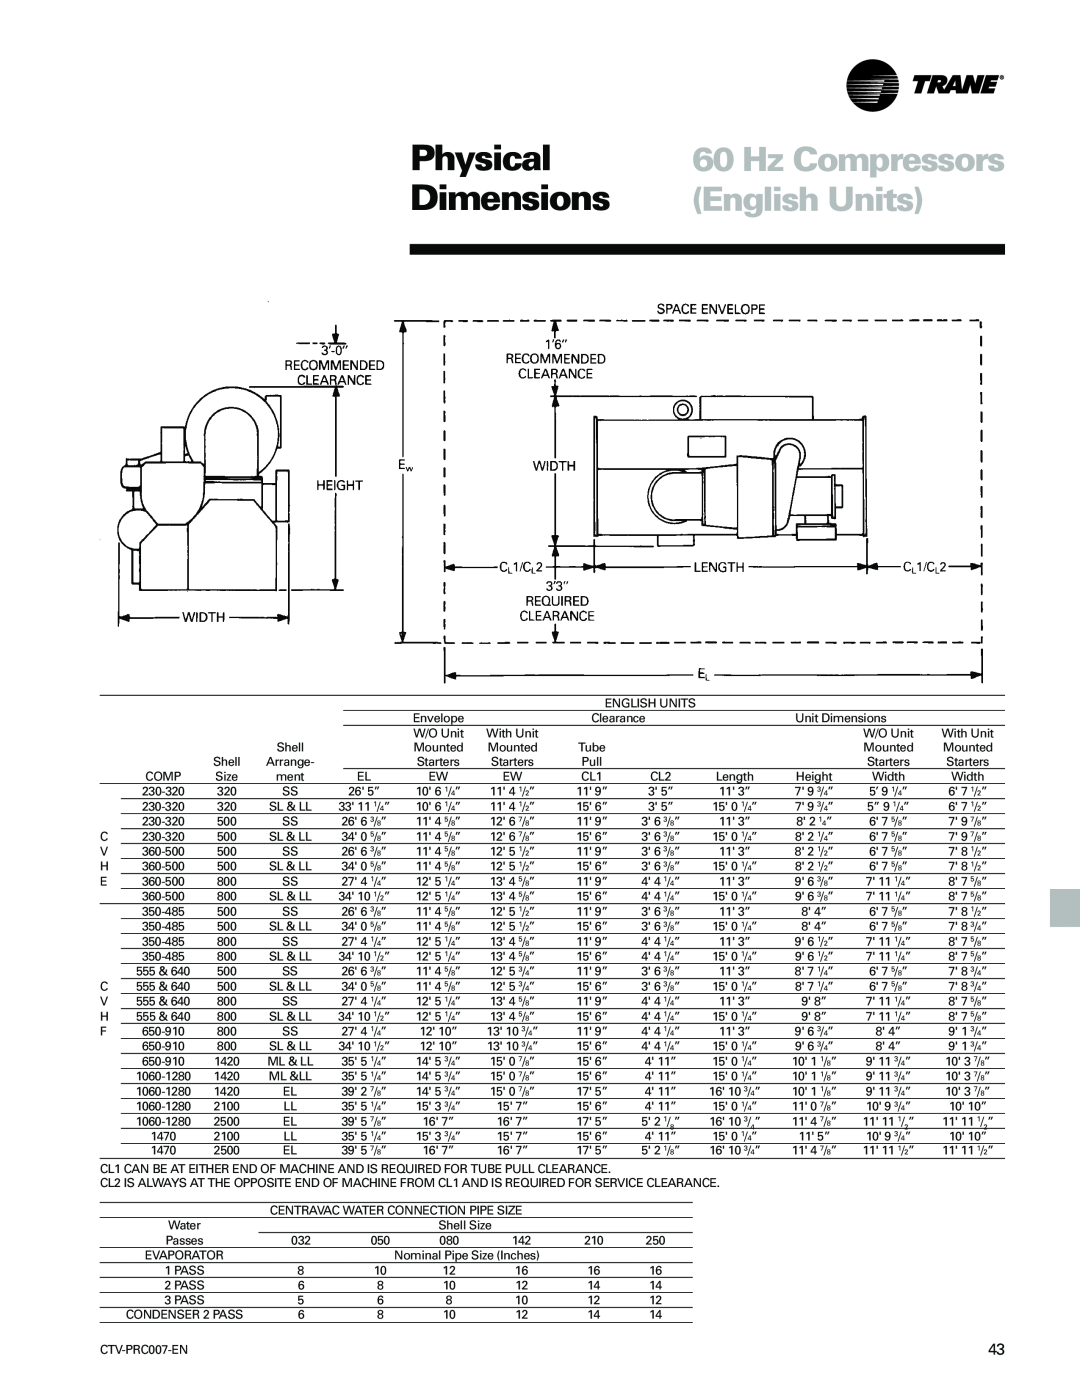 Trane ctv-prc007-en manual Physical, Dimensions, Hz Compressors, English Units 